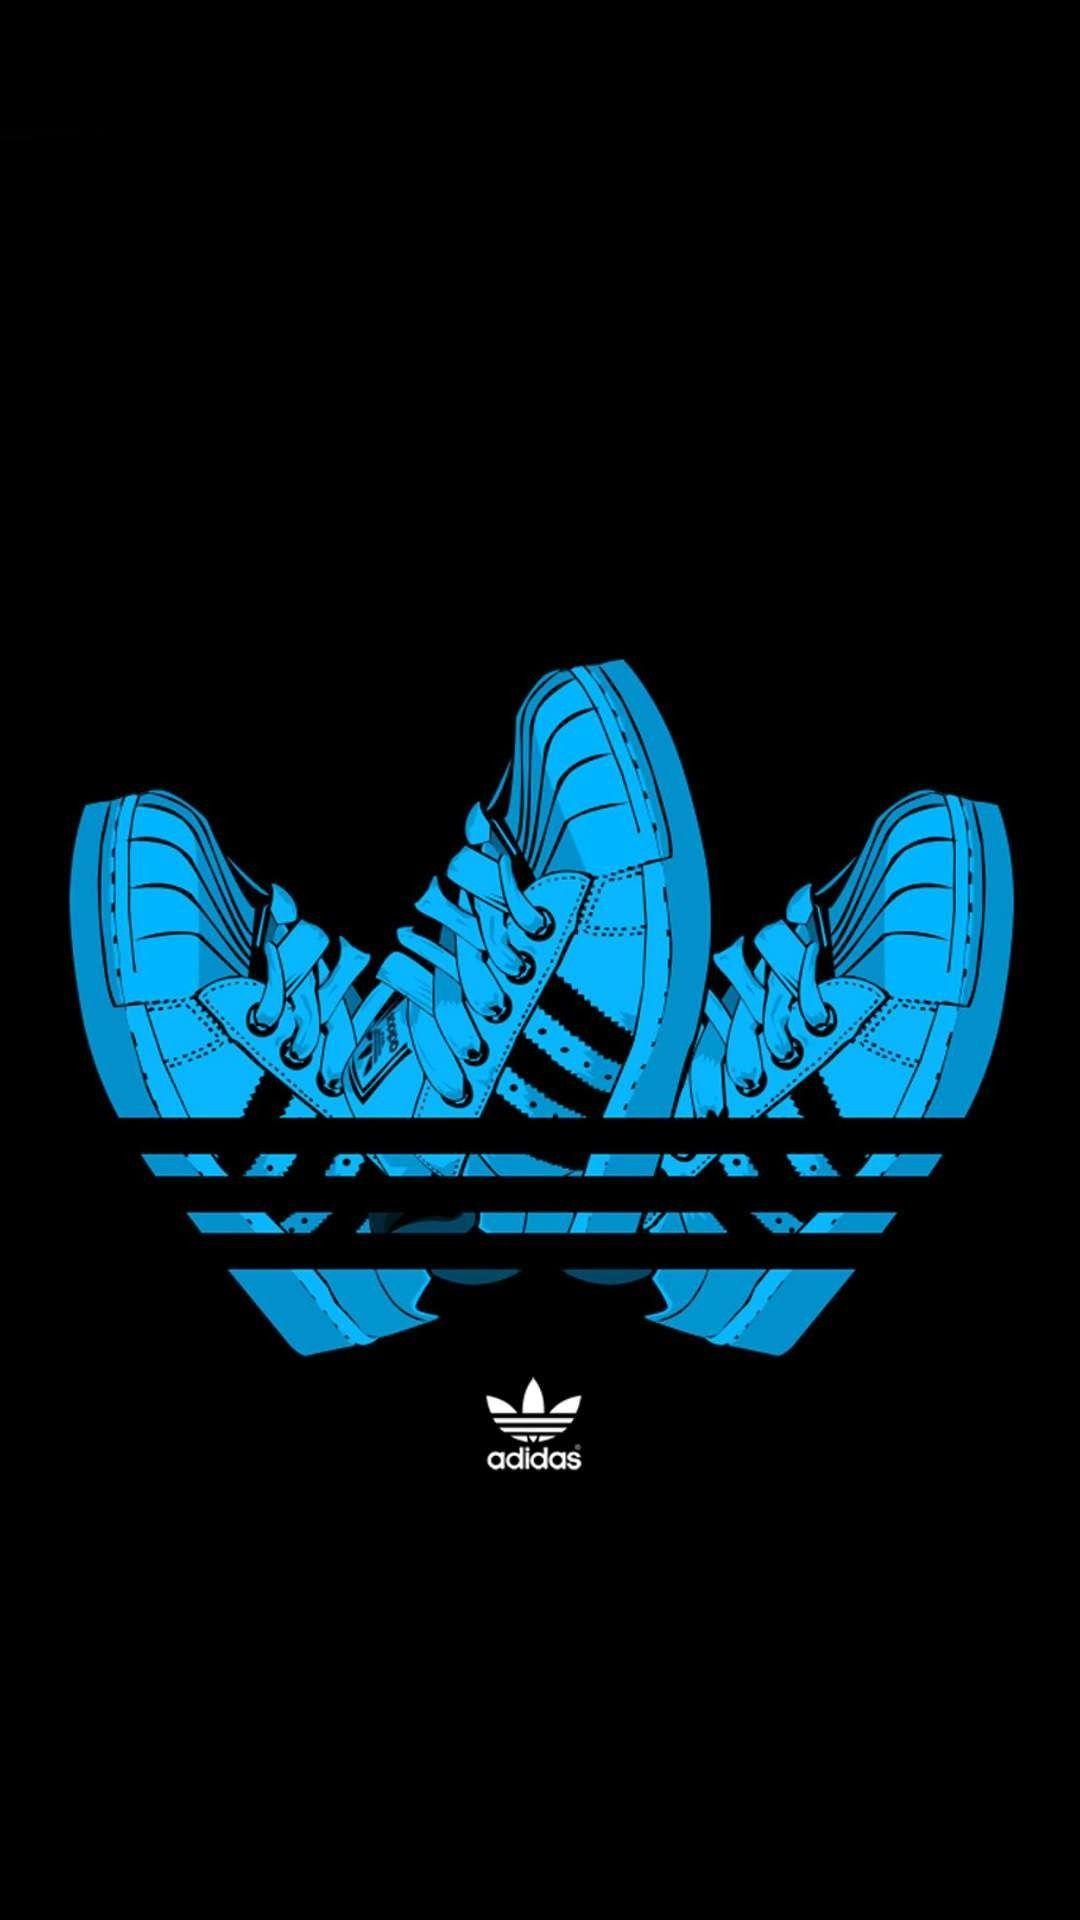 Nike & Adidas. Adidas